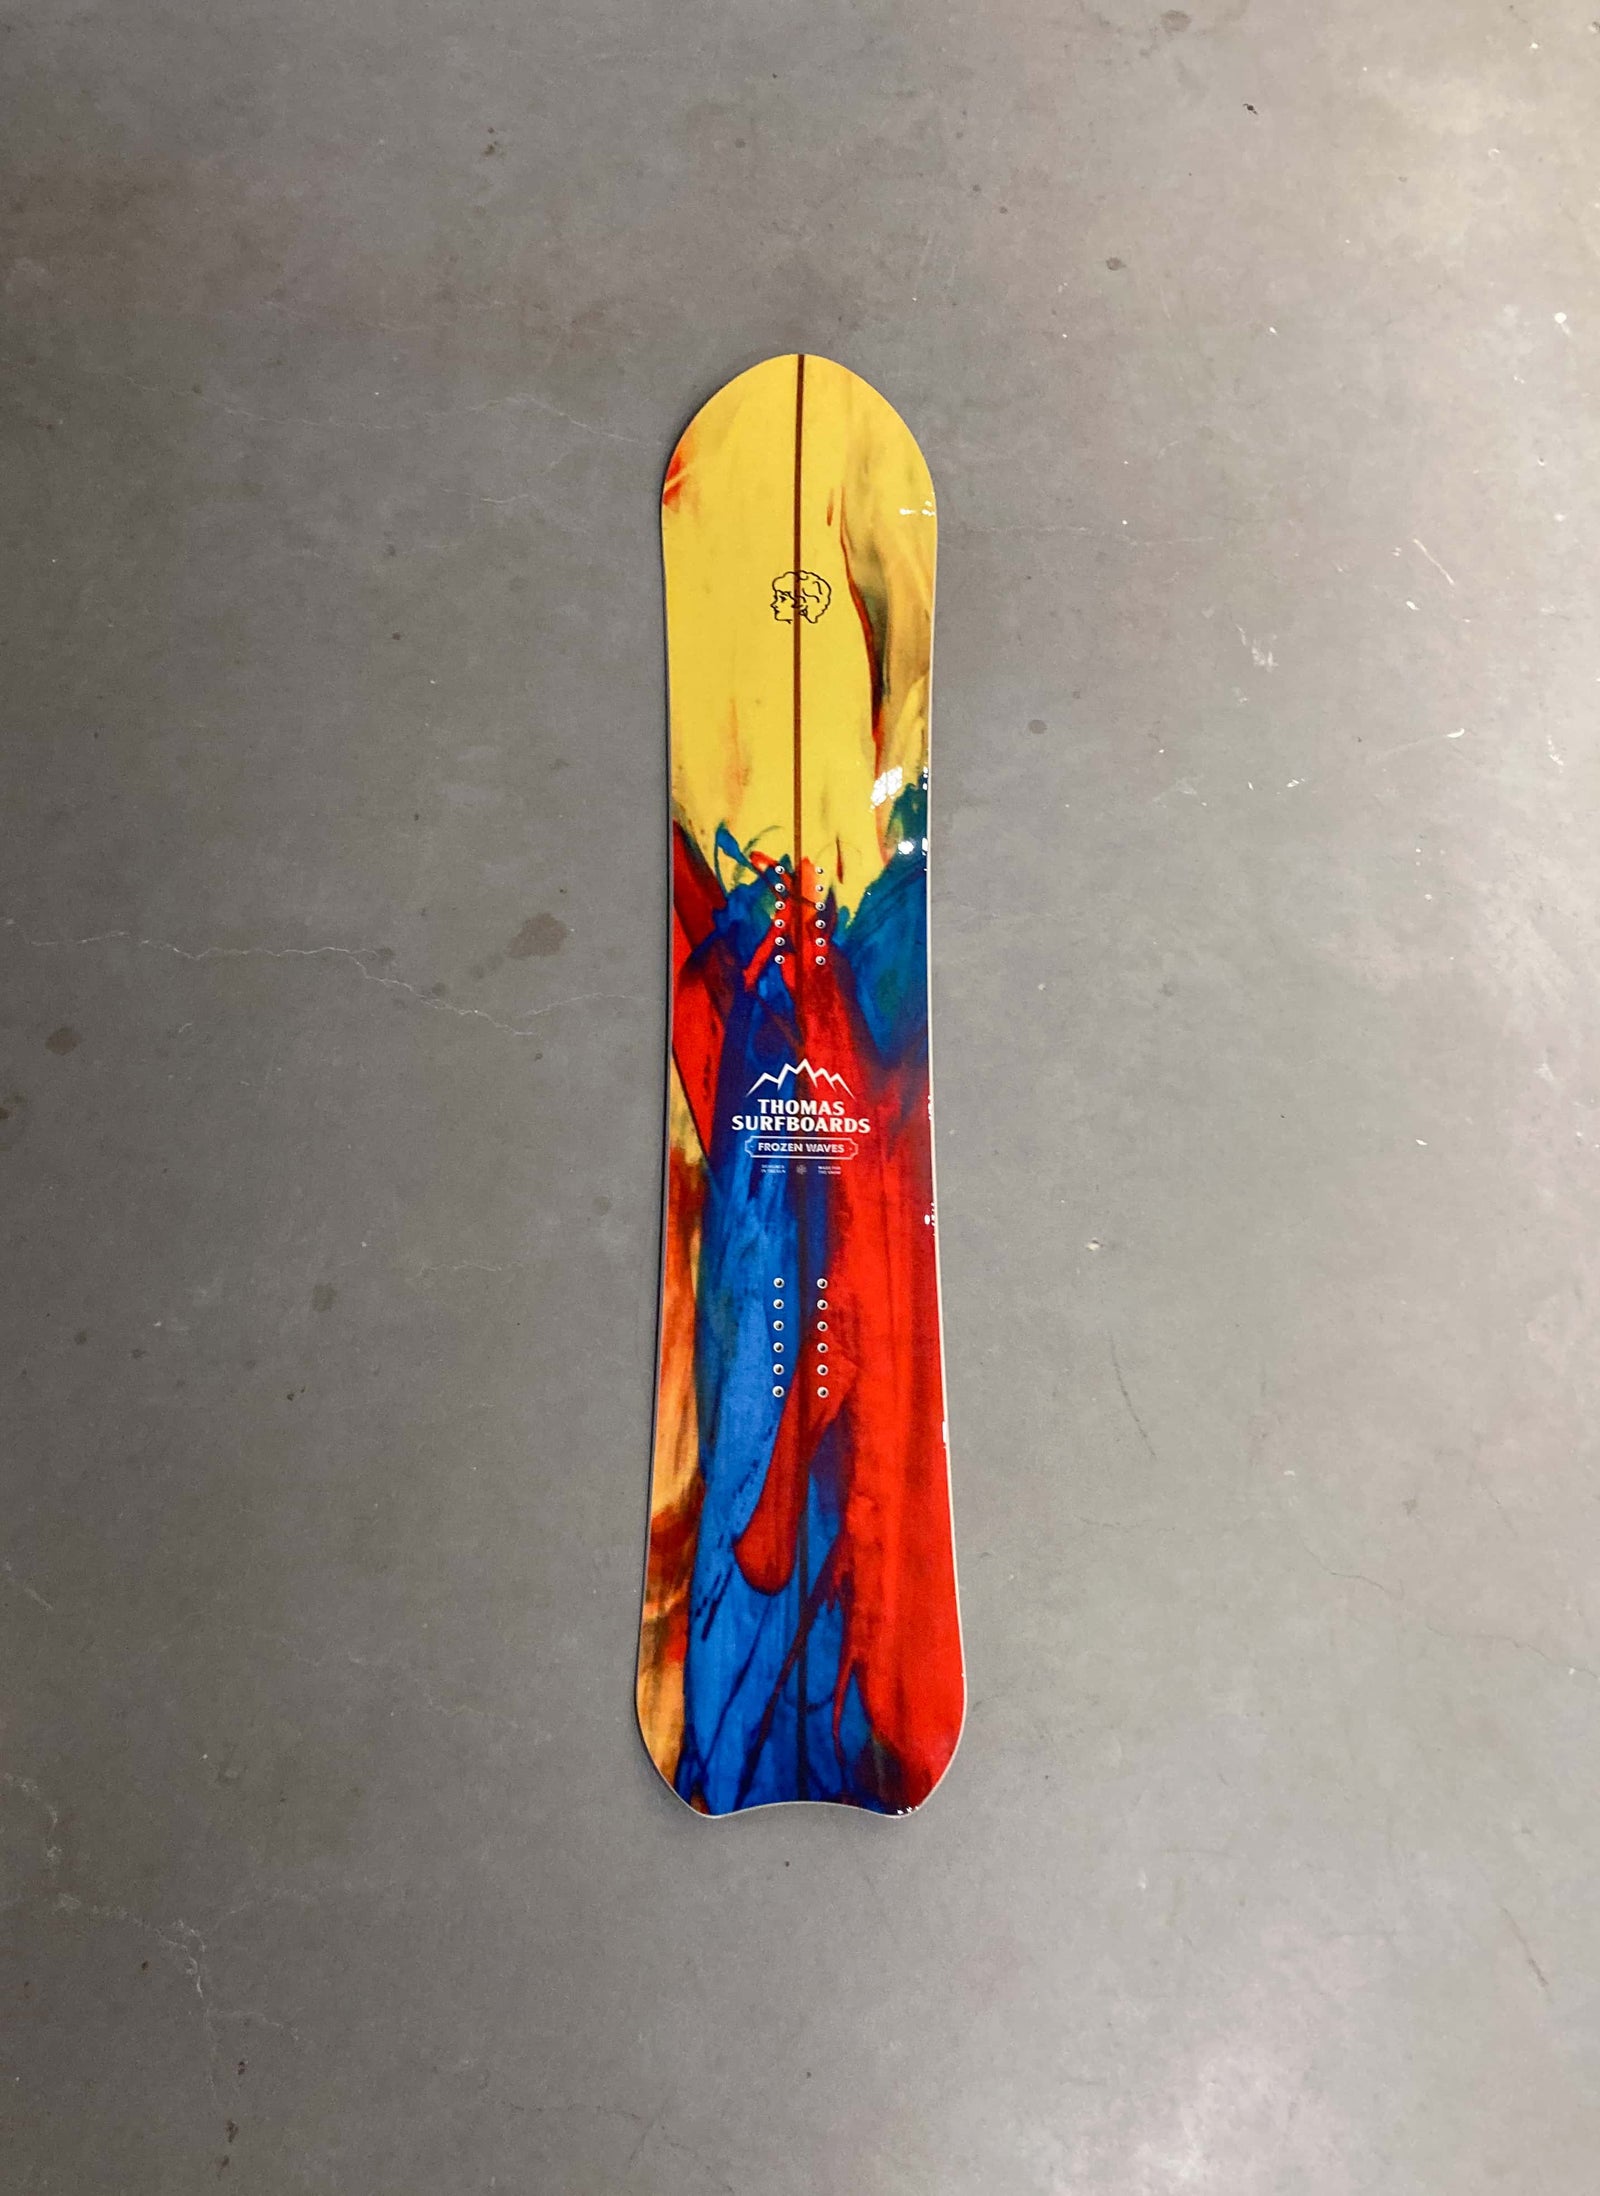 The Mod Fish Snowboard